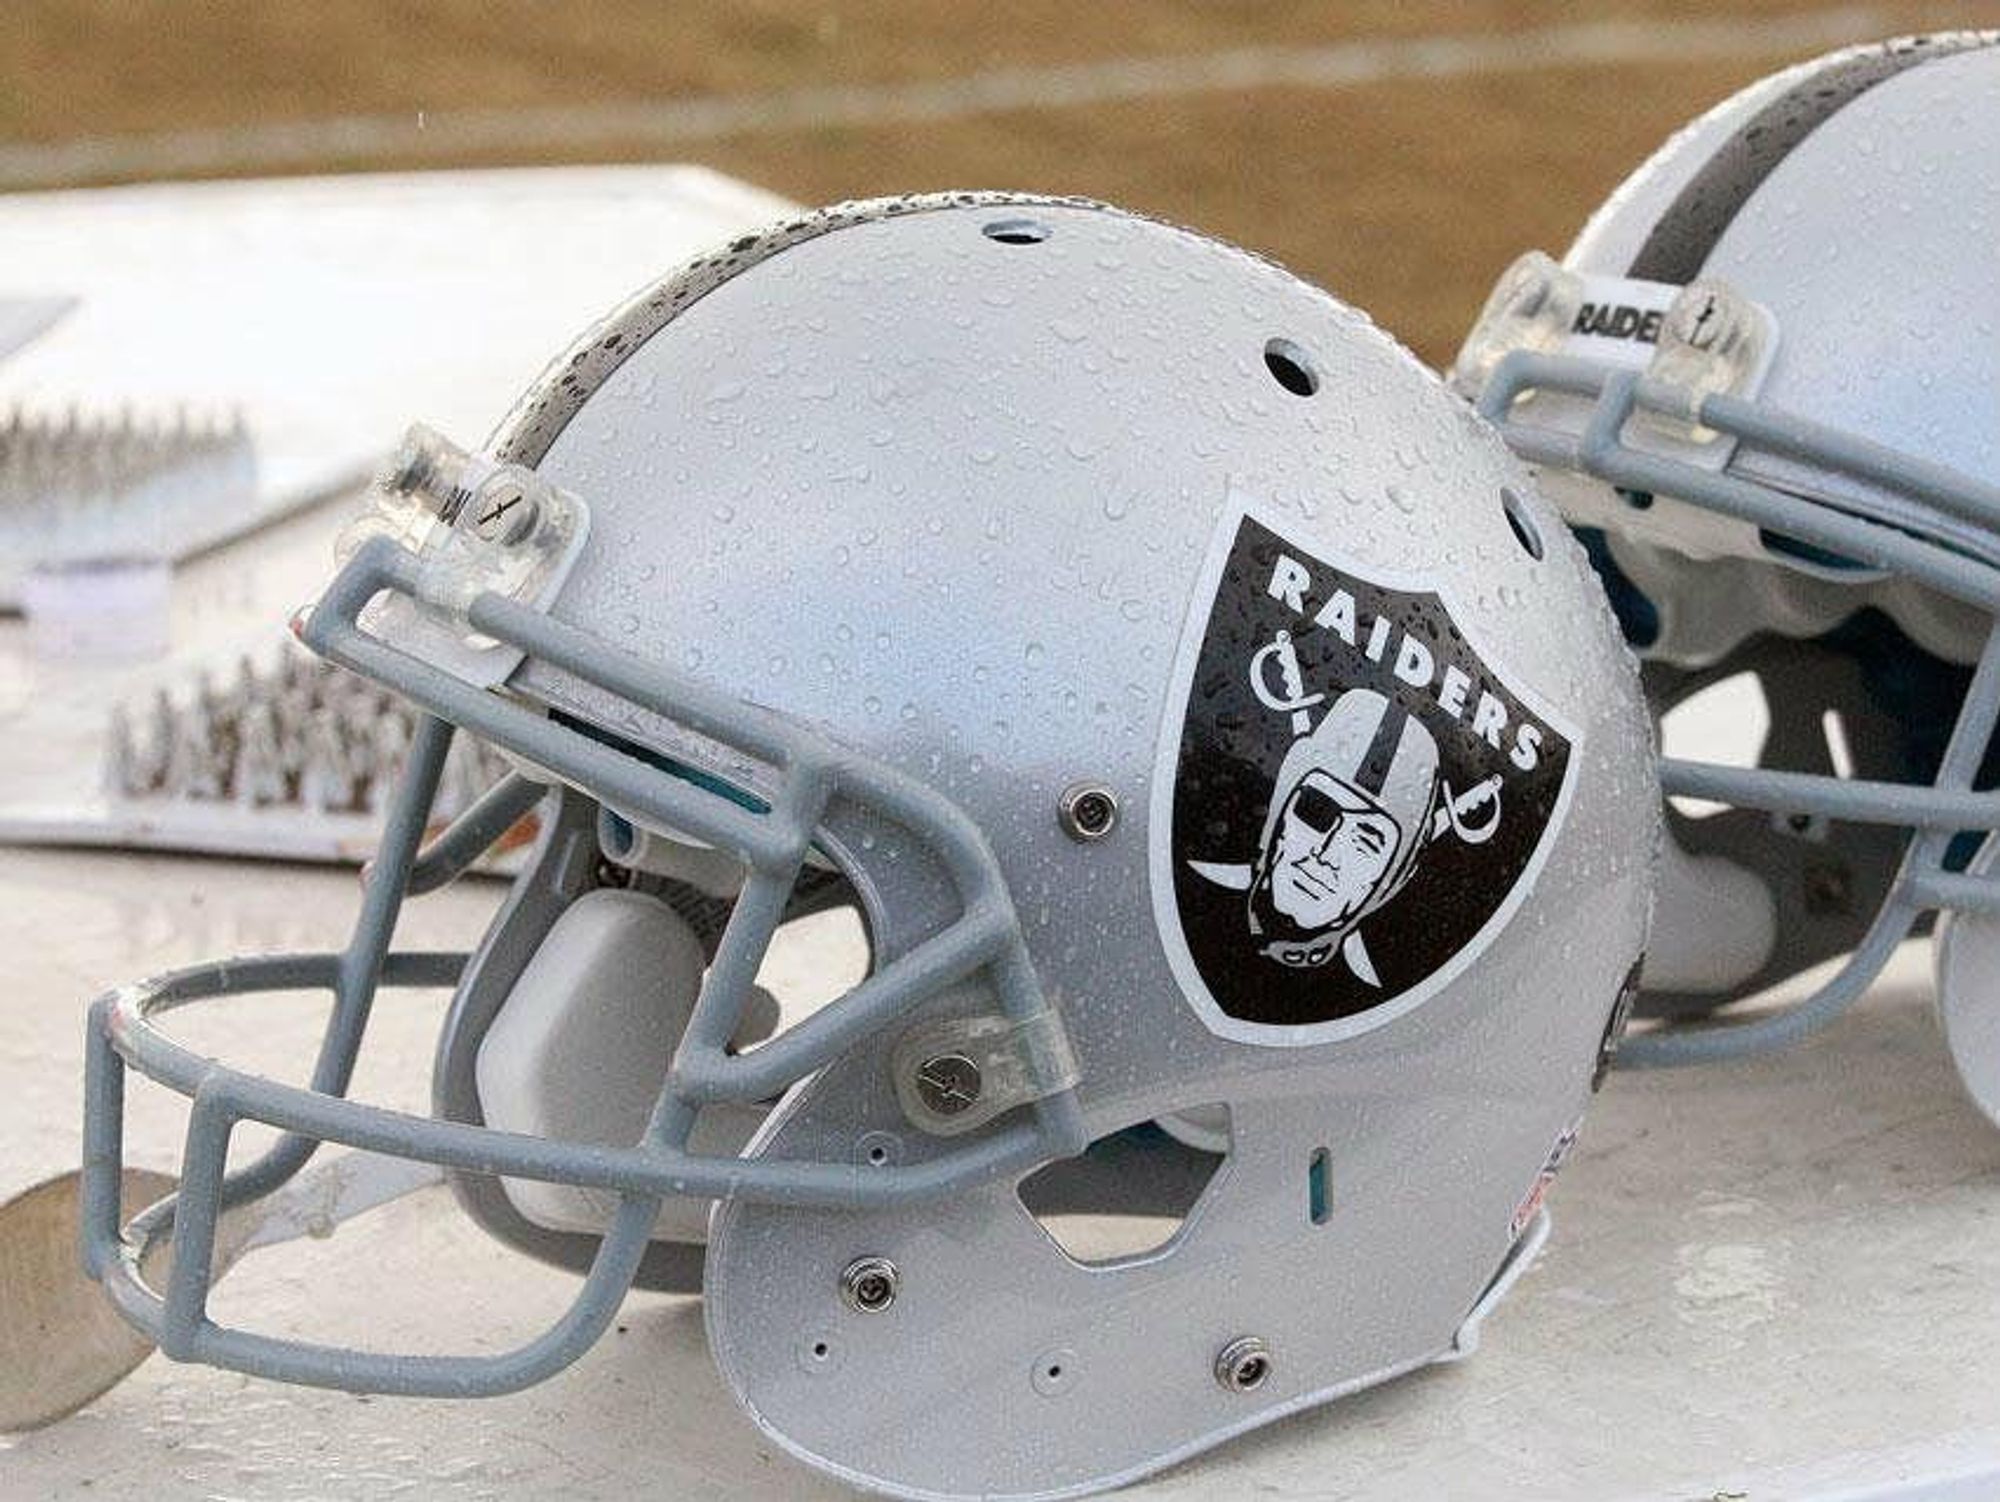 Oakland Raiders football helmets on bench